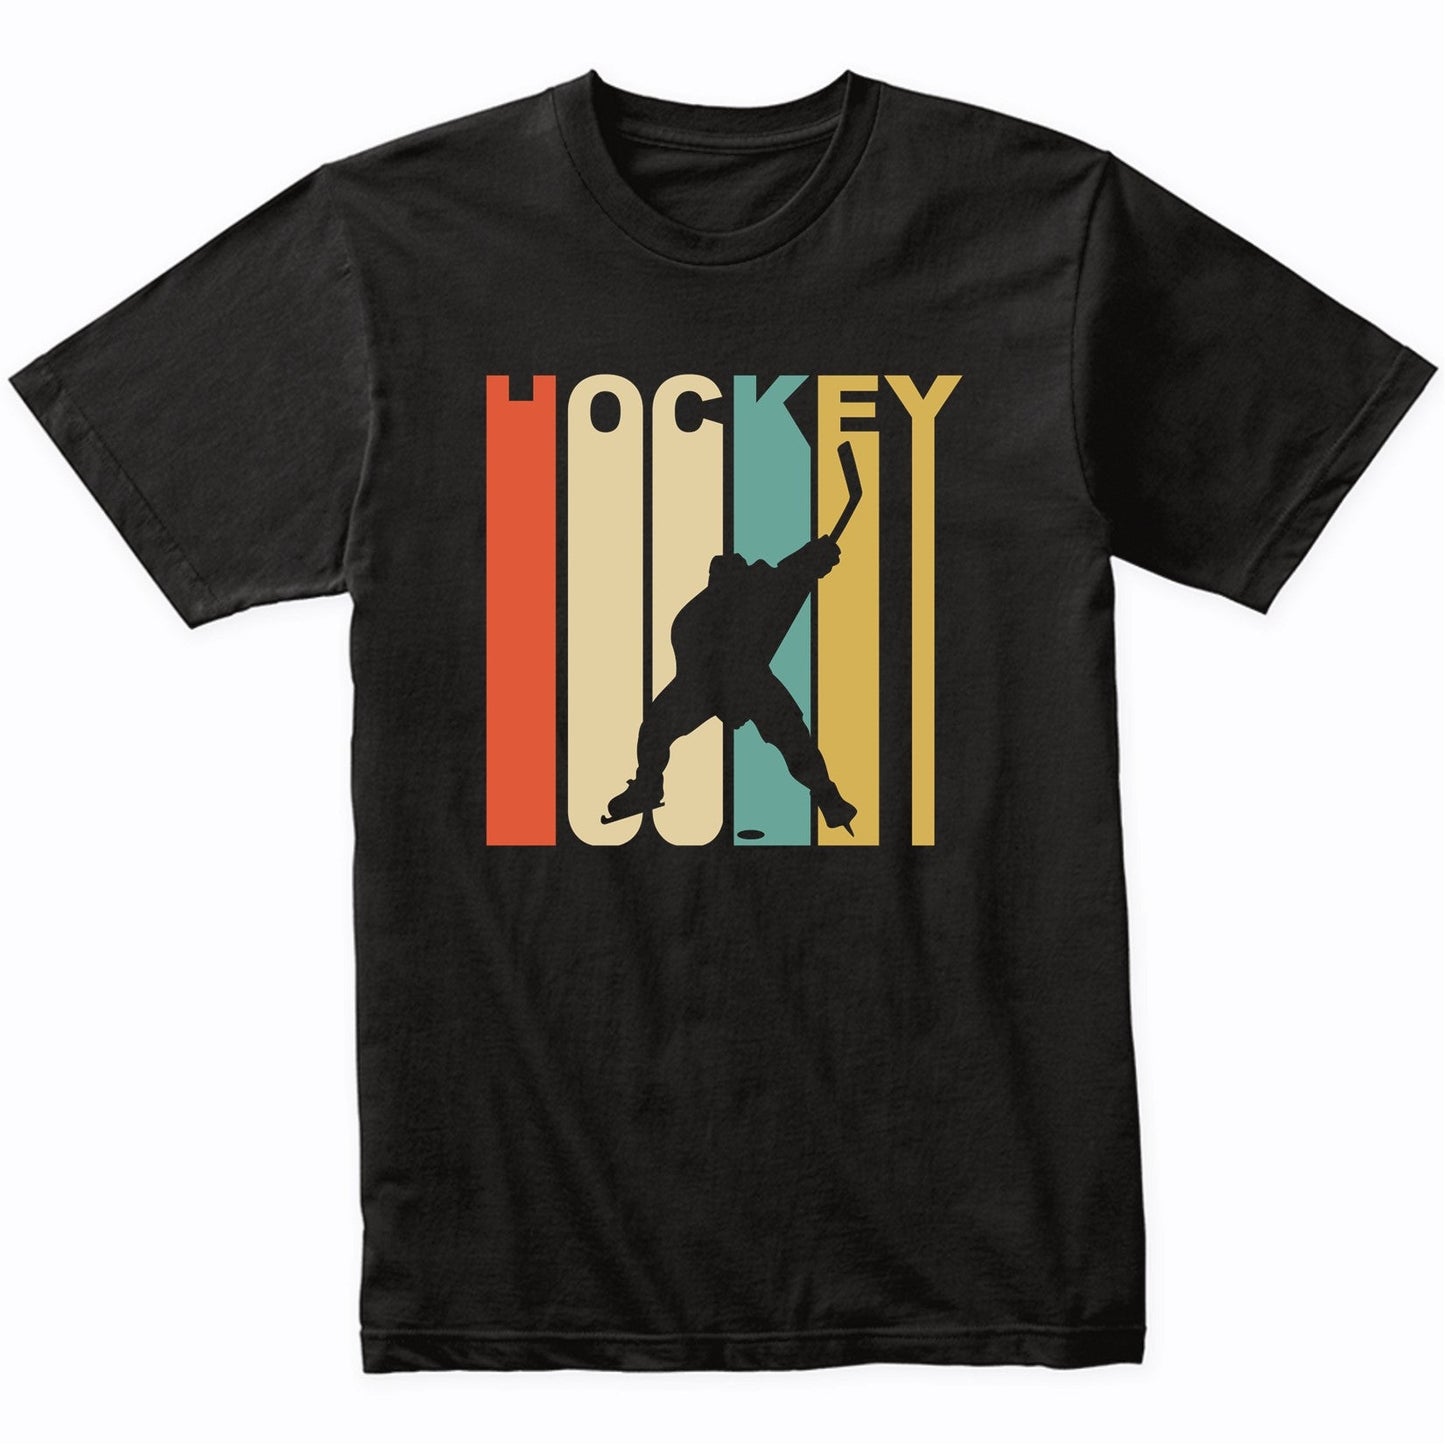 Retro 1970's Style Hockey Player Silhouette Sports T-Shirt